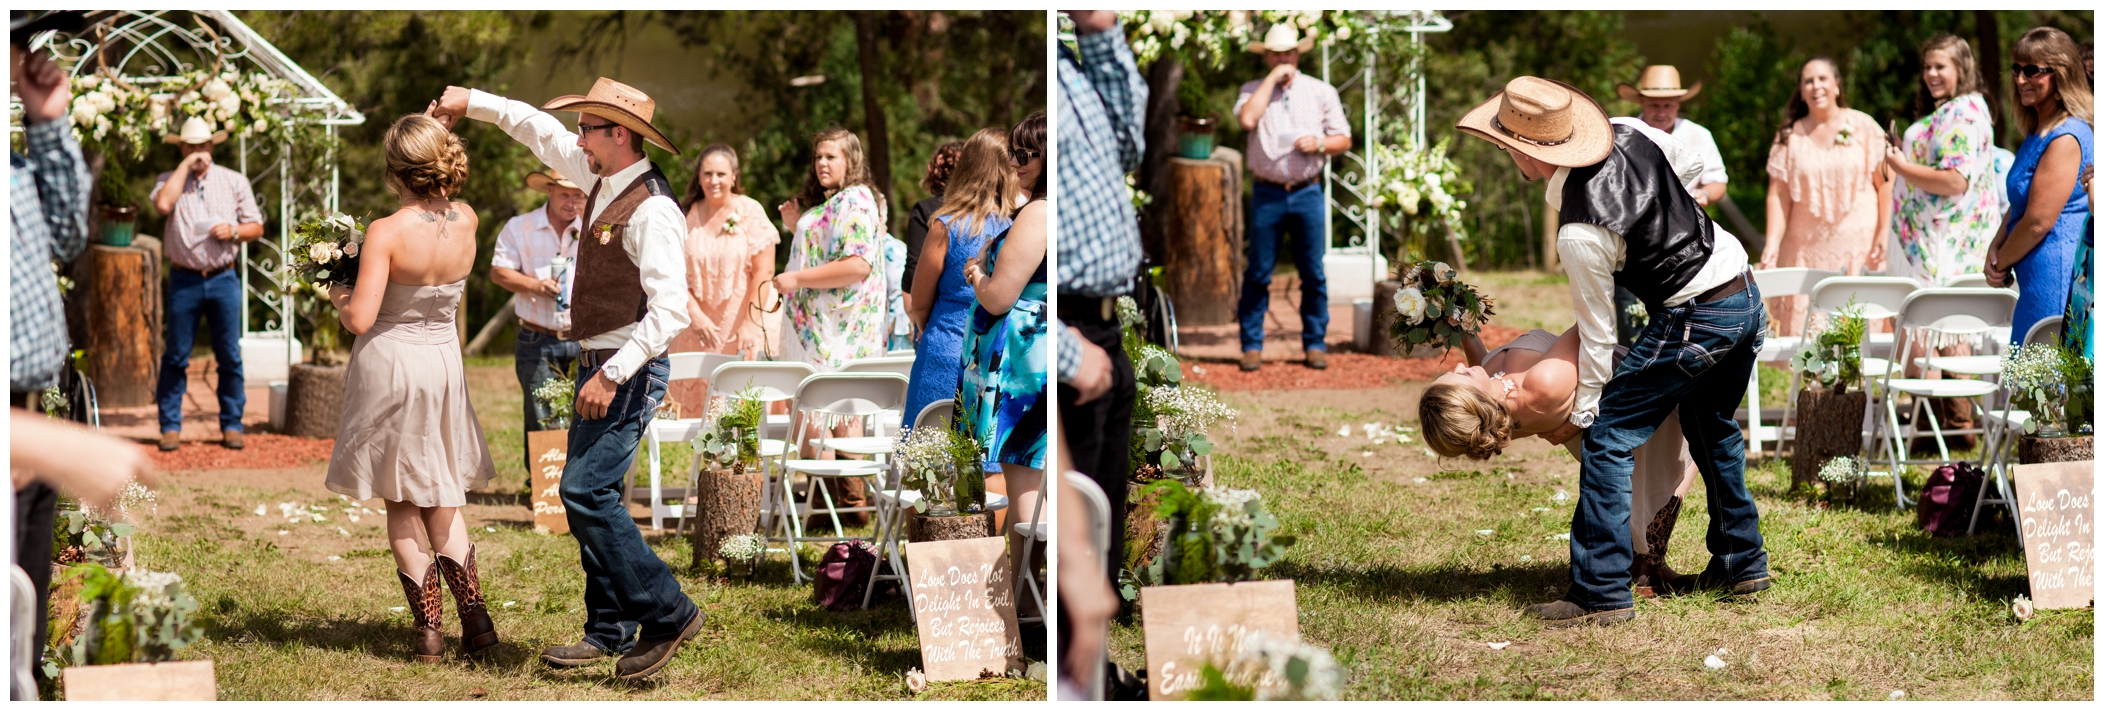 Mon Cheri wedding ceremony in Estes Park